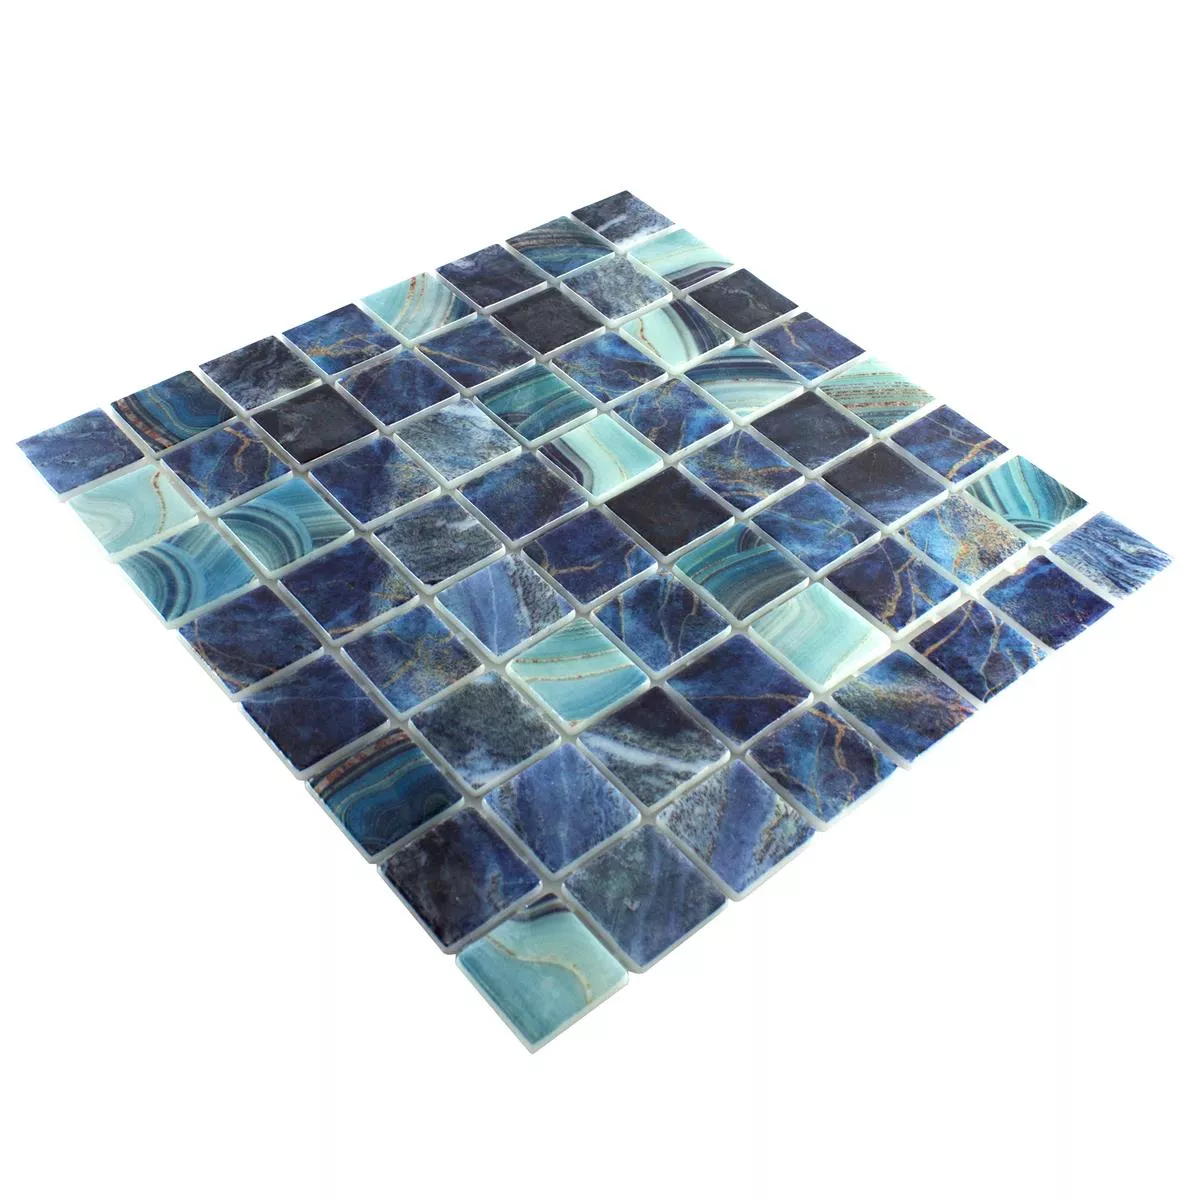 Glas Schwimmbad Mosaik Baltic Blau Türkis 38x38mm